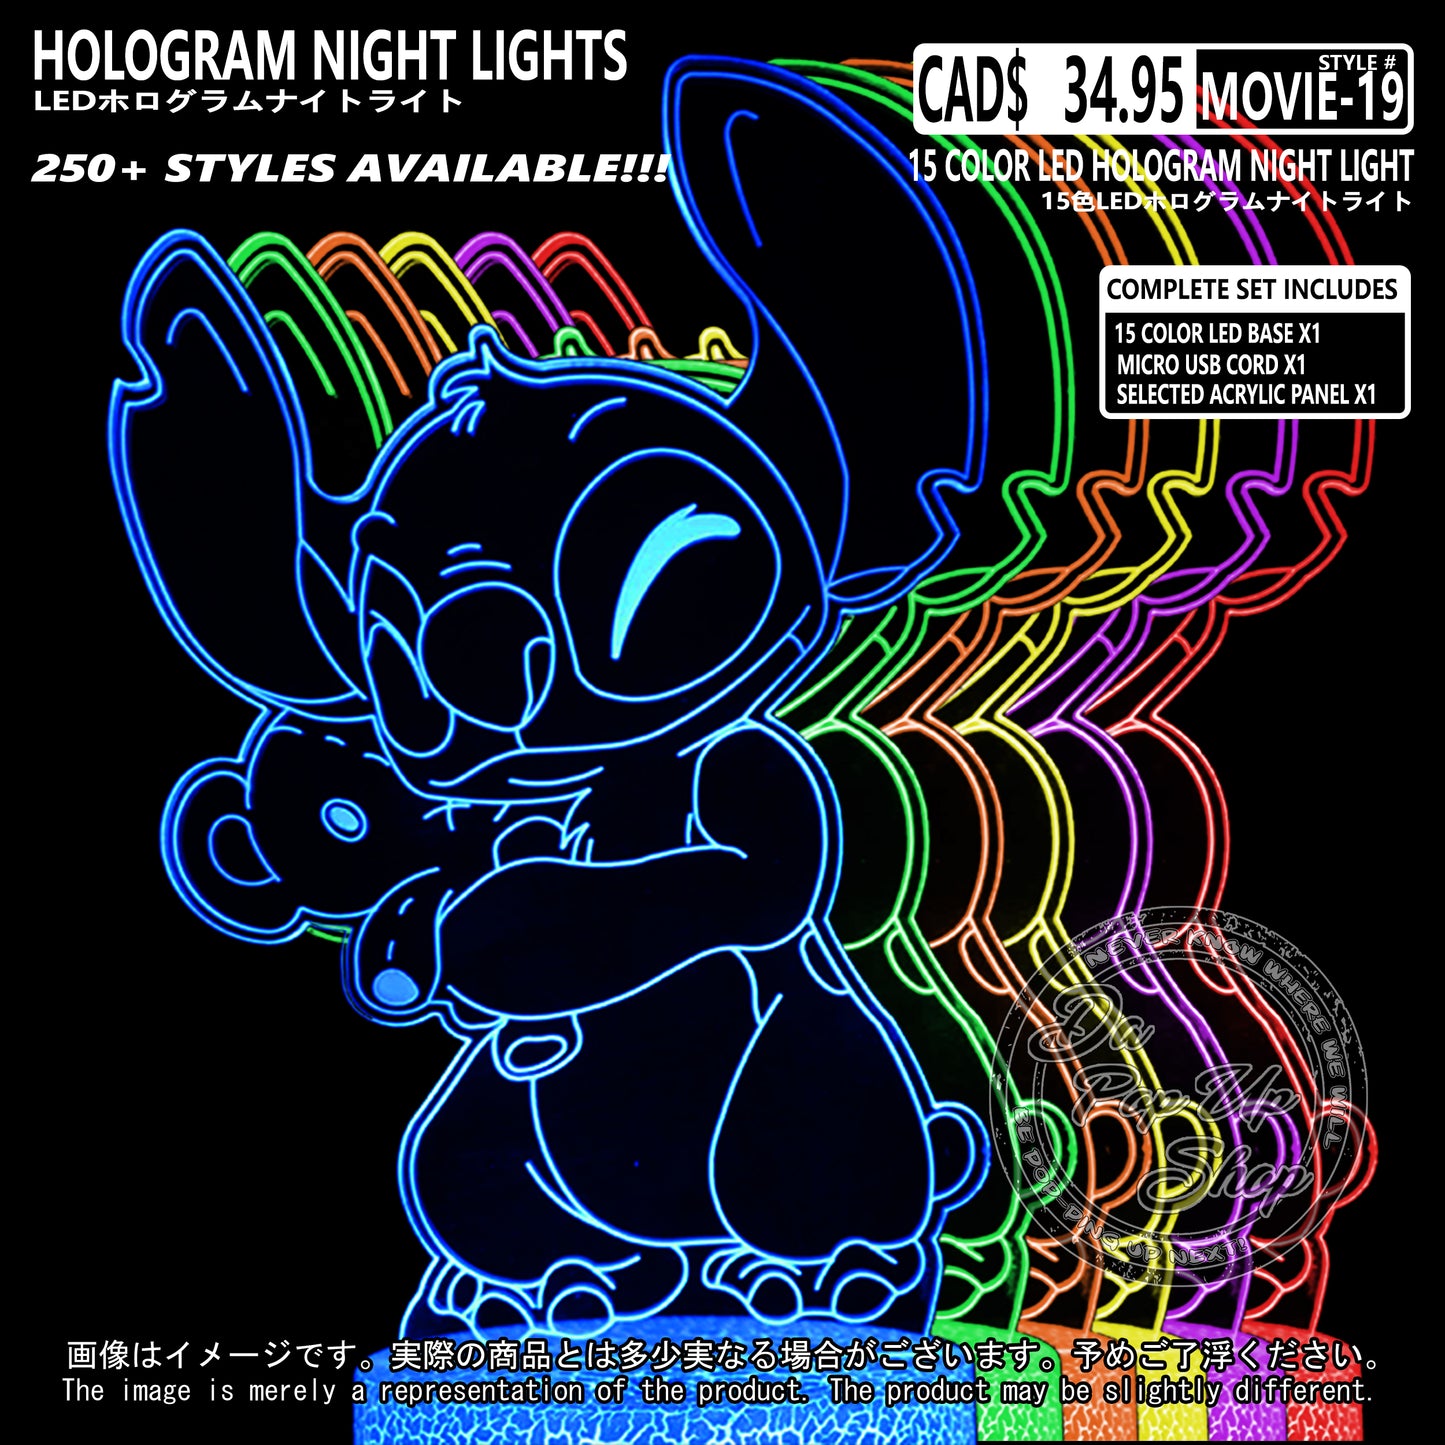 (MOVIE-19) Lilo & Stitch Hologram LED Night Light